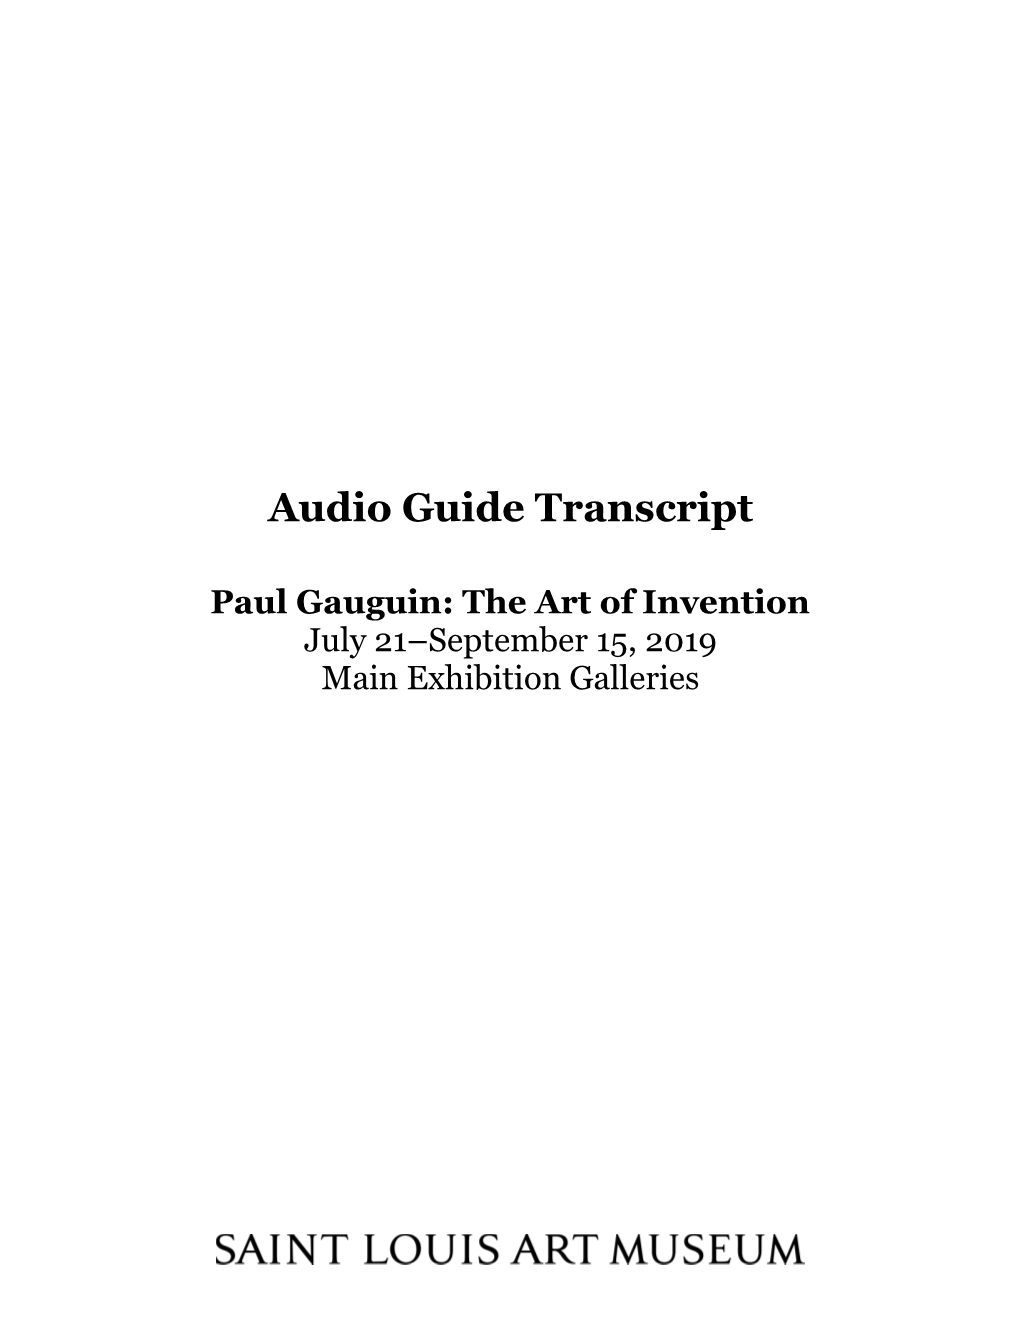 Audio Guide Transcript Paul Gauguin